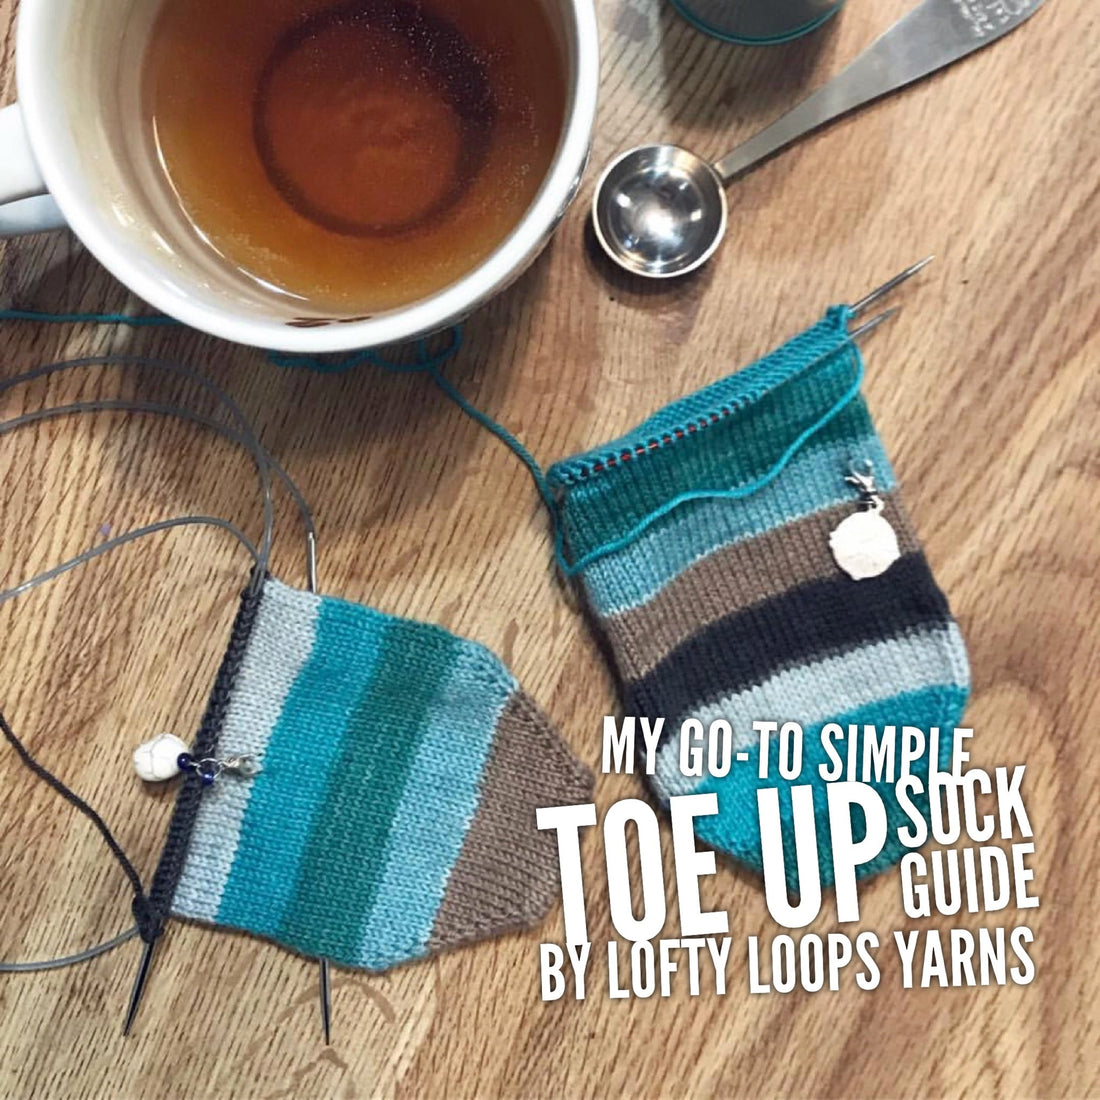 My Go-To Simple Toe Up Sock Guide - Lofty Loops Yarns